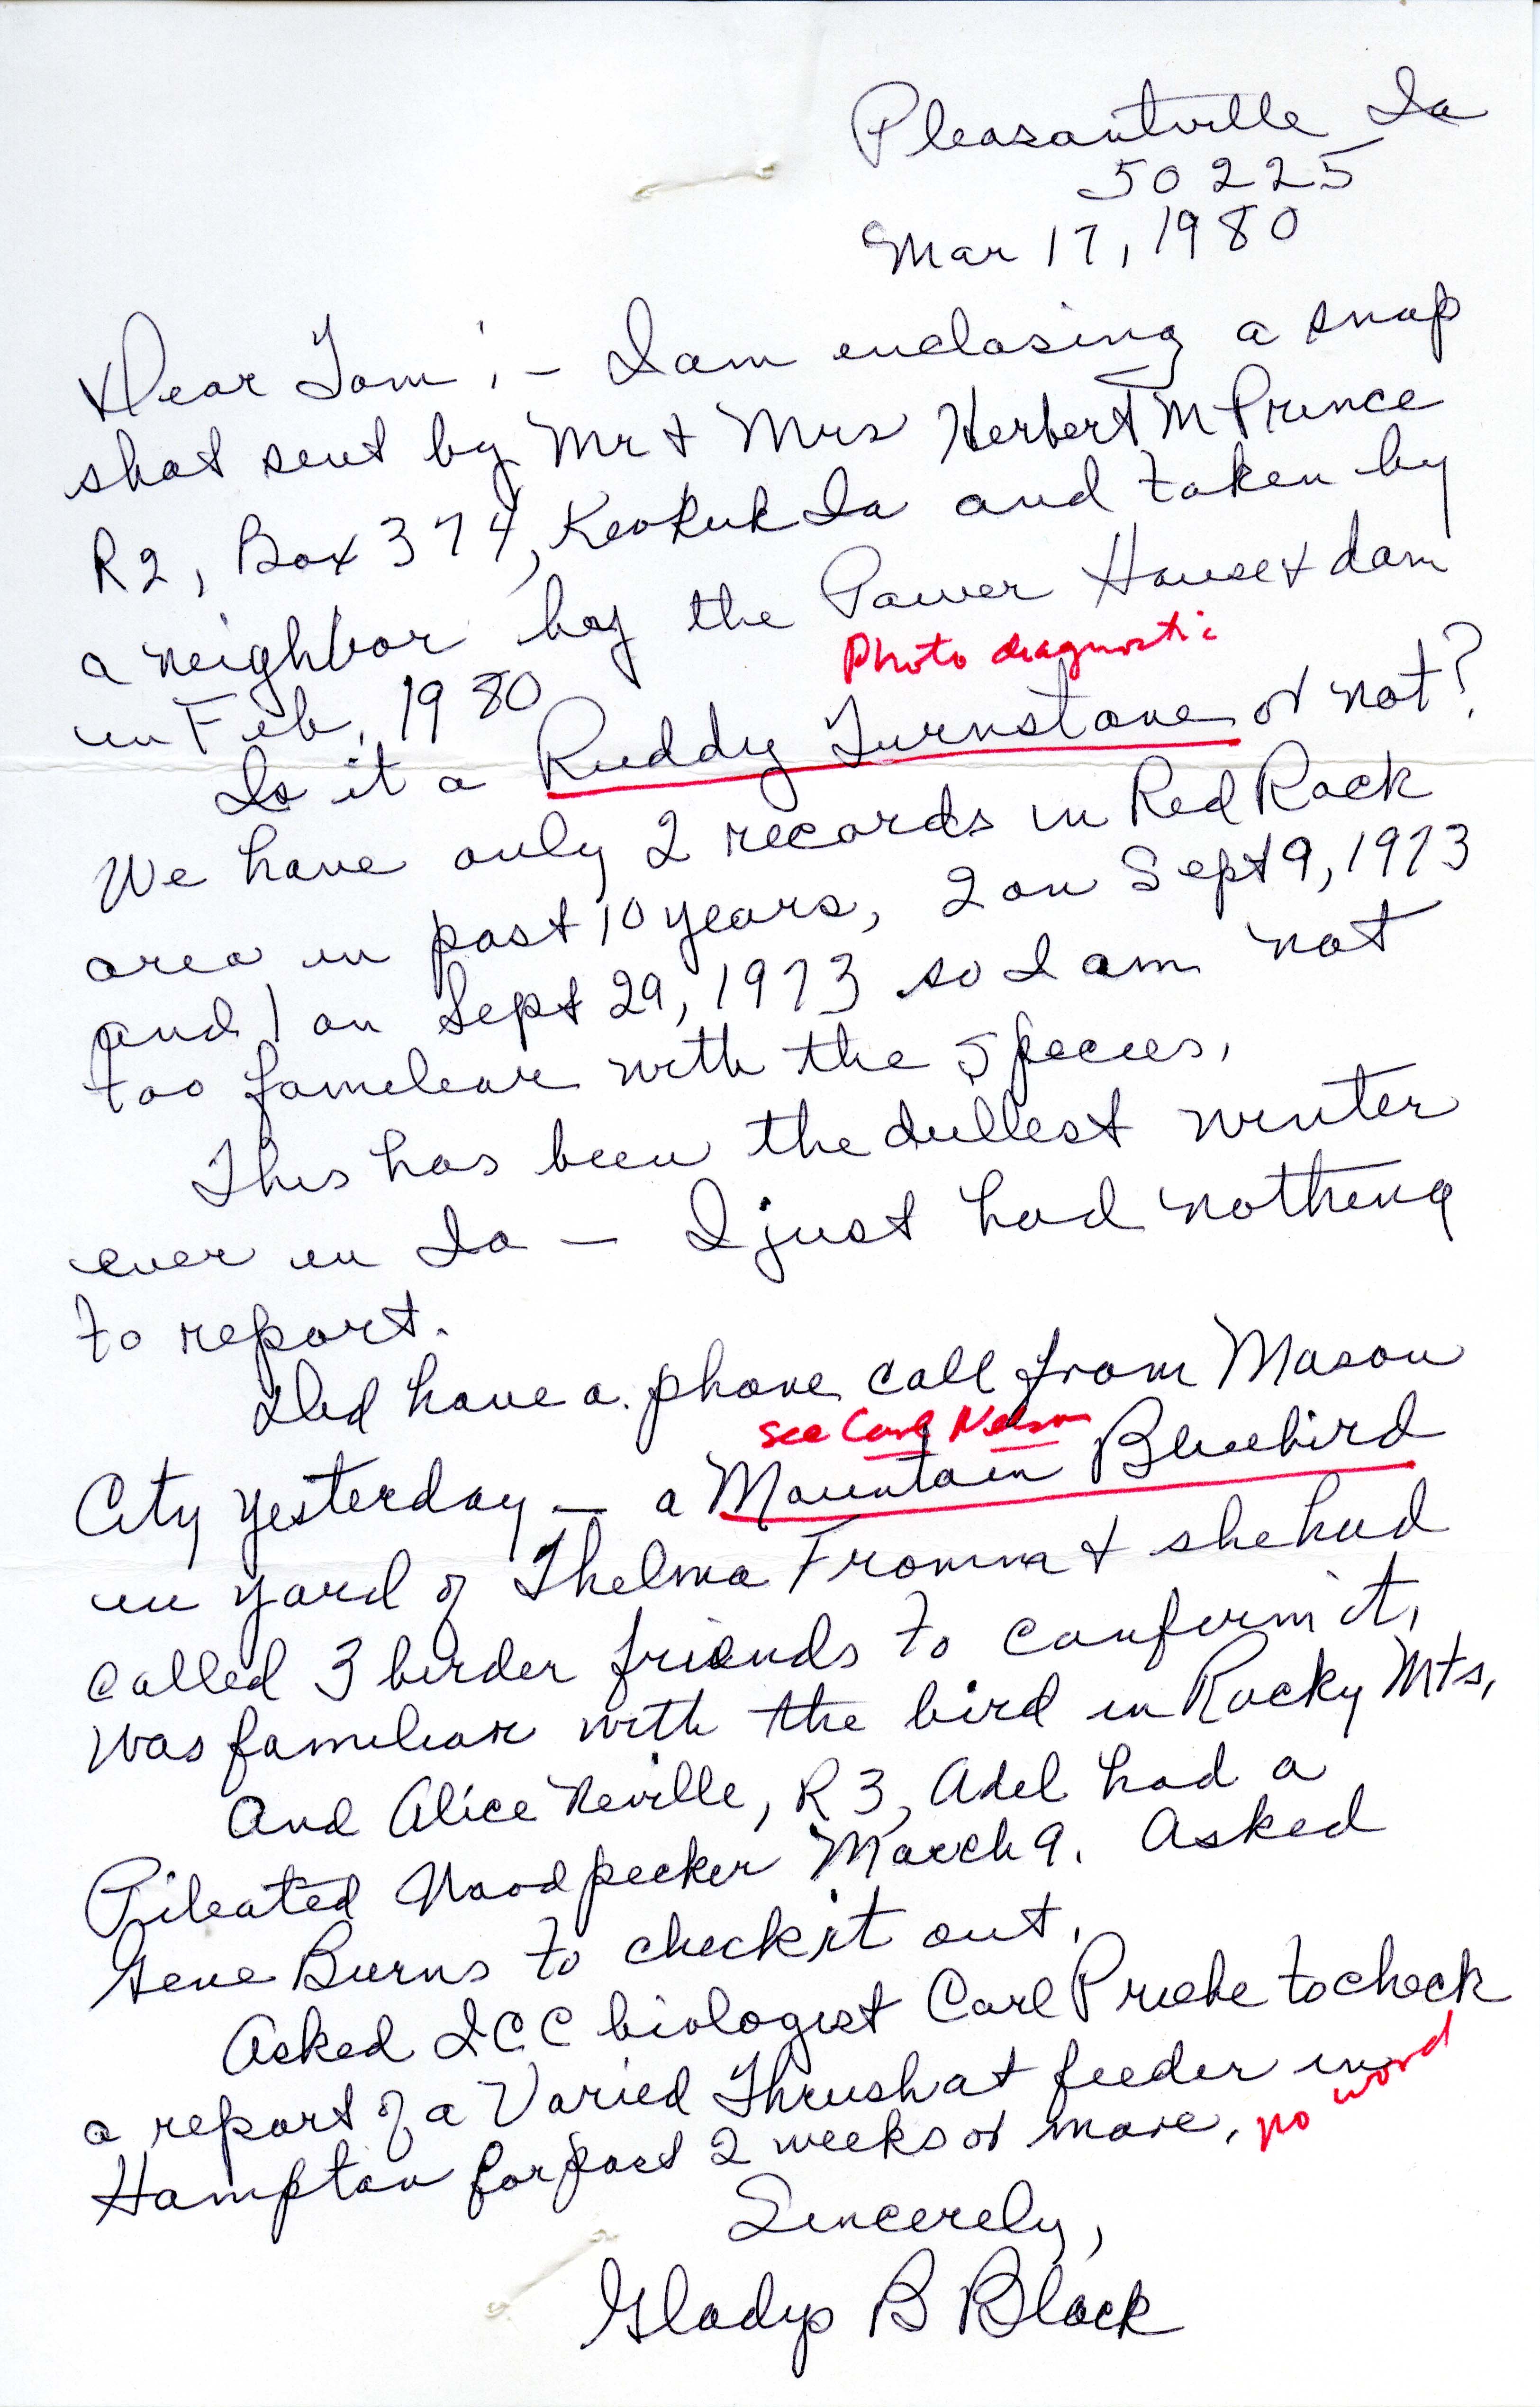 Gladys Black letter to Thomas H. Kent regarding bird sightings, March 17, 1980